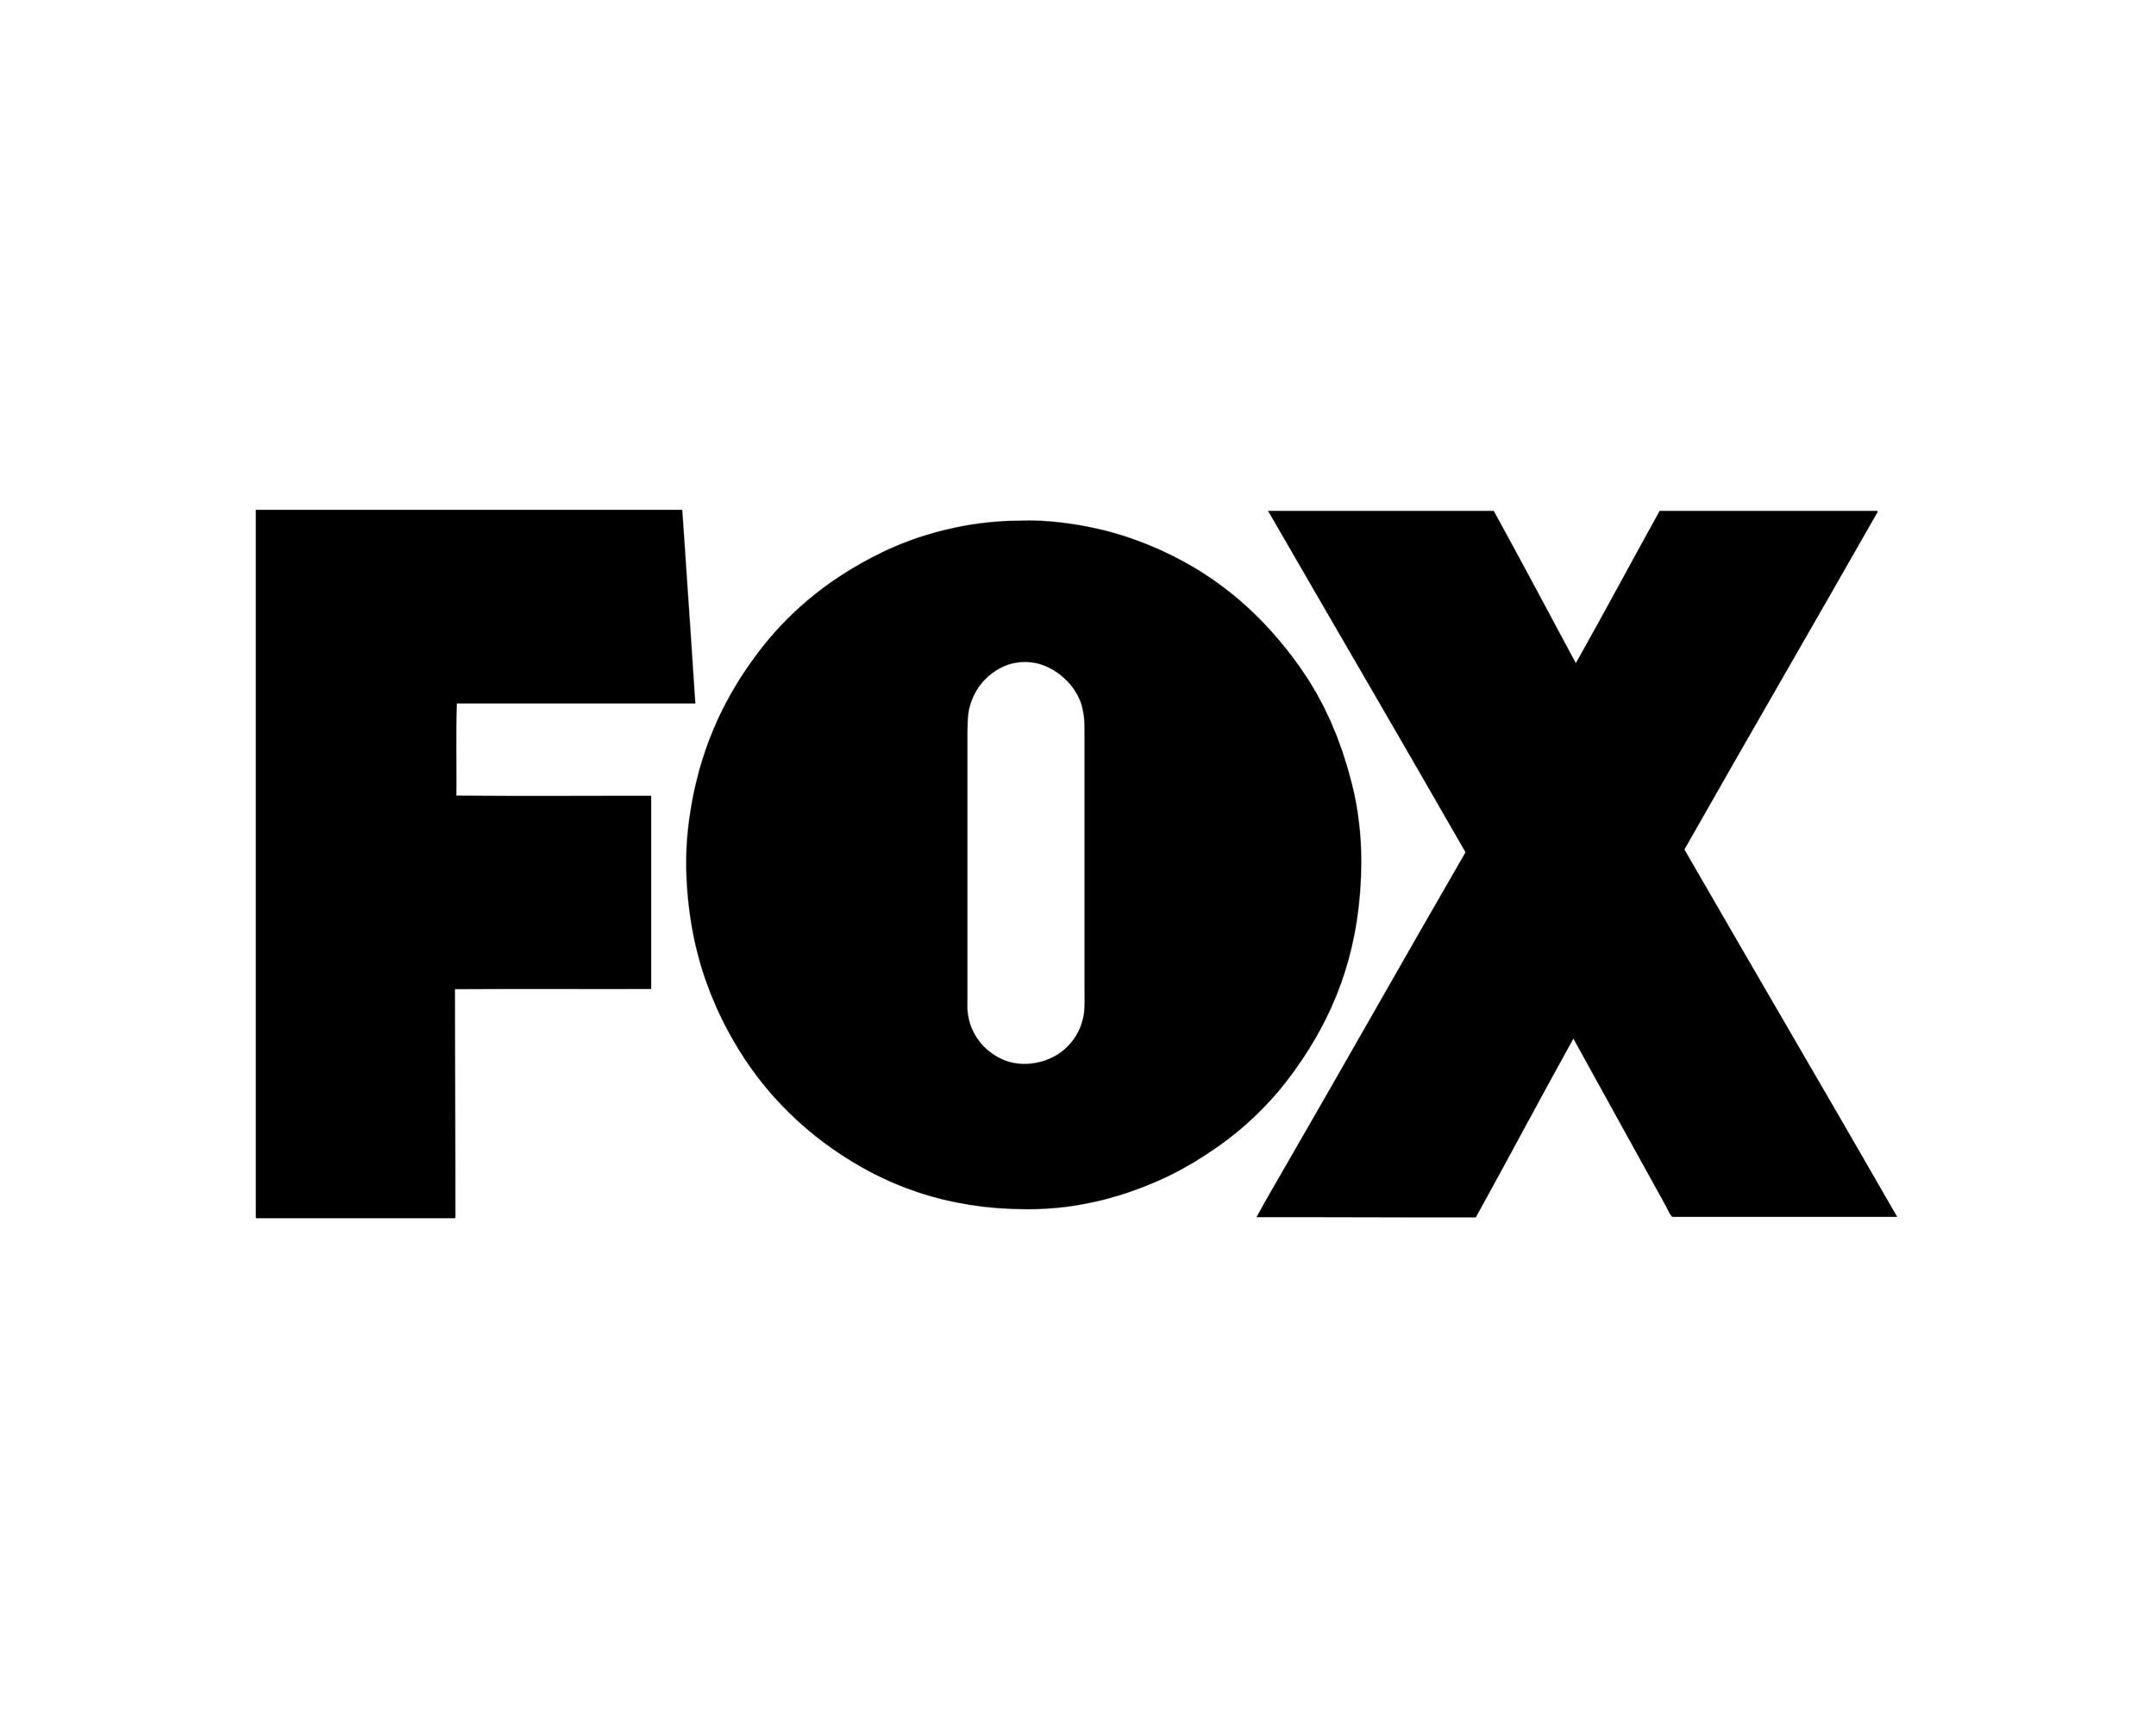 fox-logo-png-1624.png